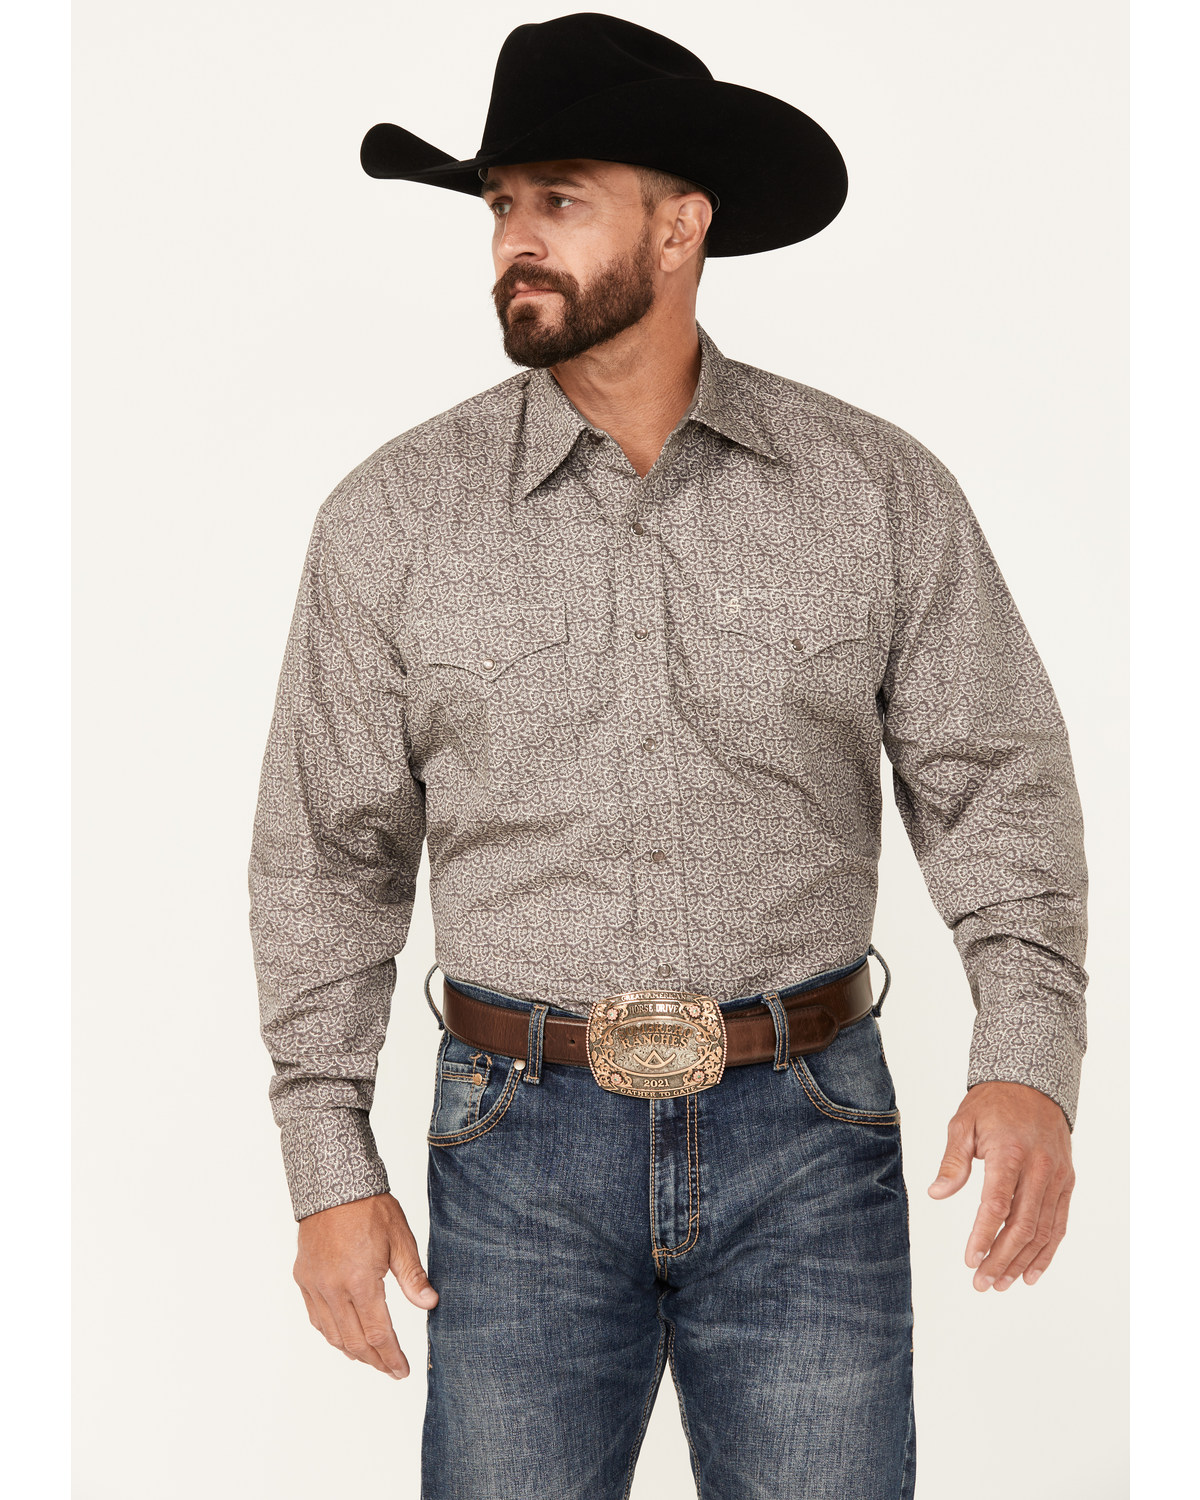 Stetson Men's Floral Print Long Sleeve Snap Western Shirt